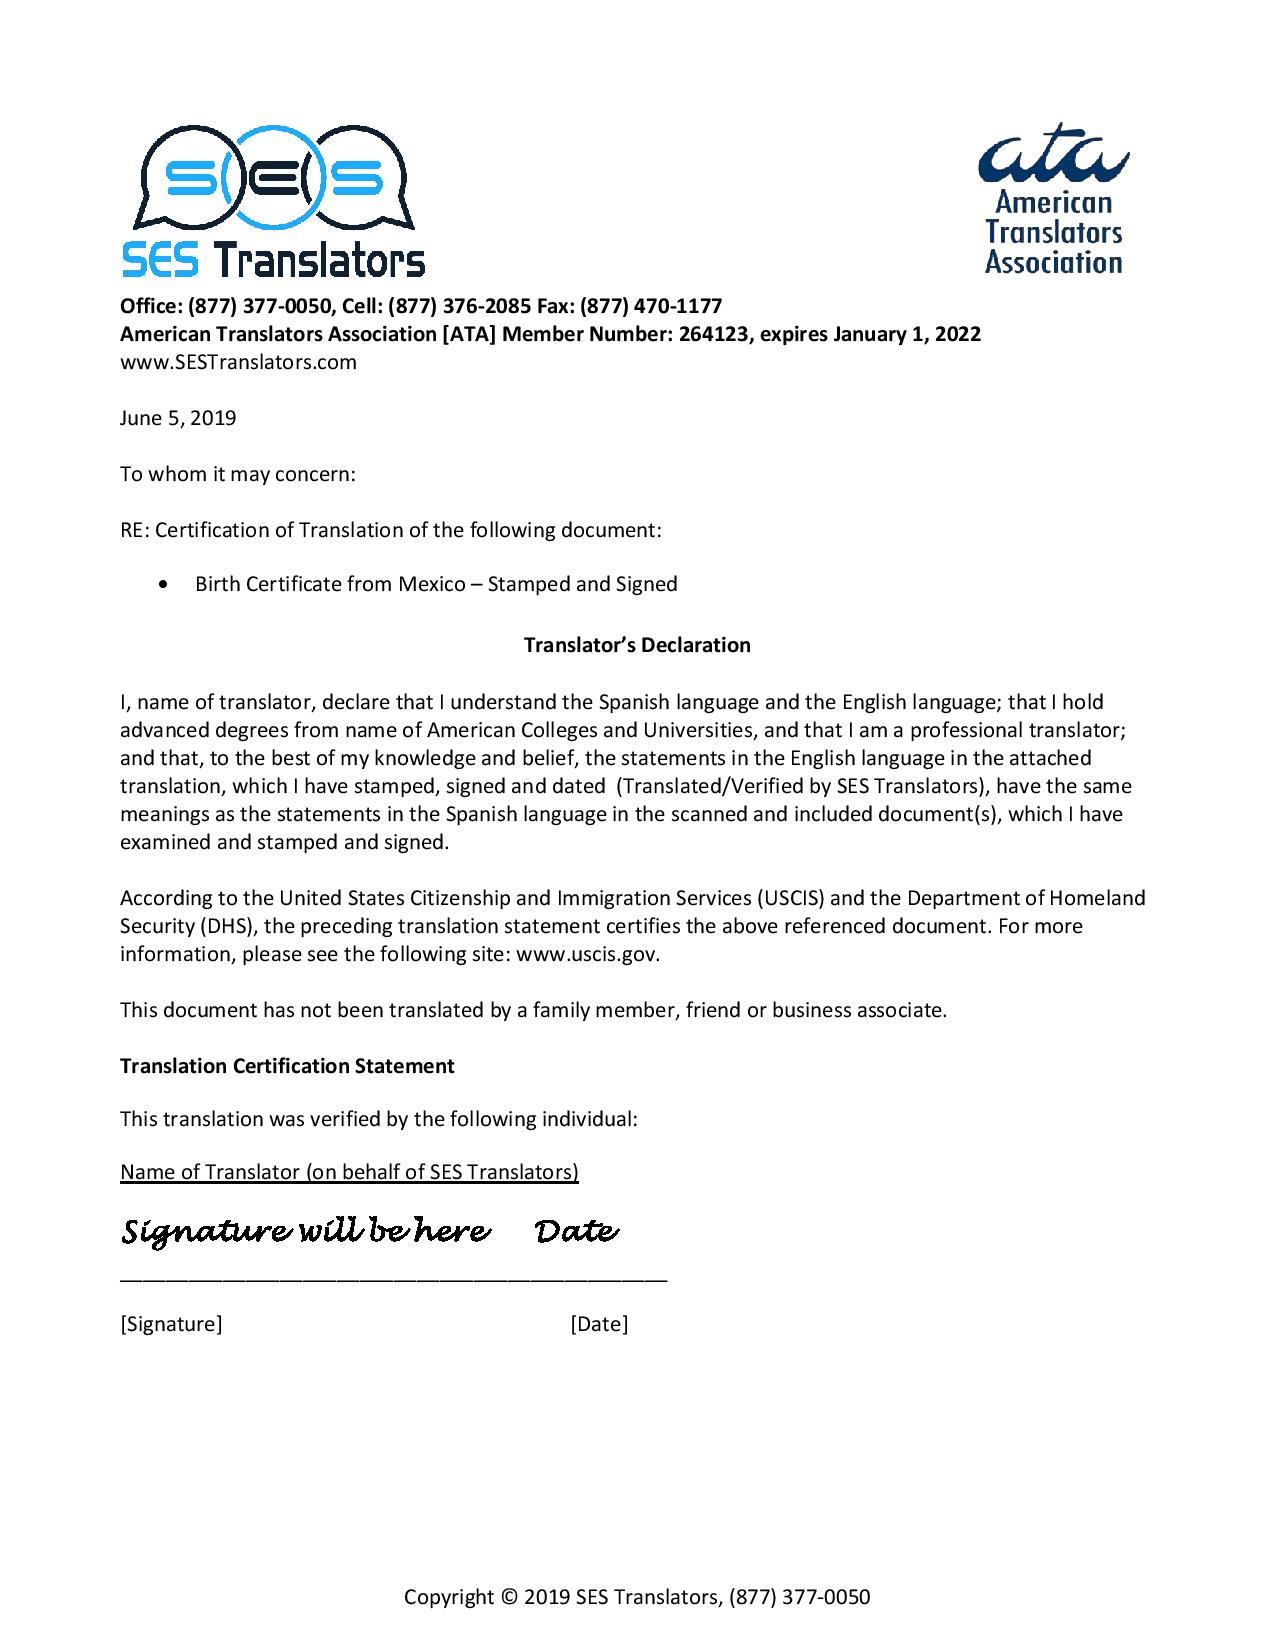 Comprehensive 5 Step Guide To Translate Birth Certificates Intended For Birth Certificate Translation Template Uscis